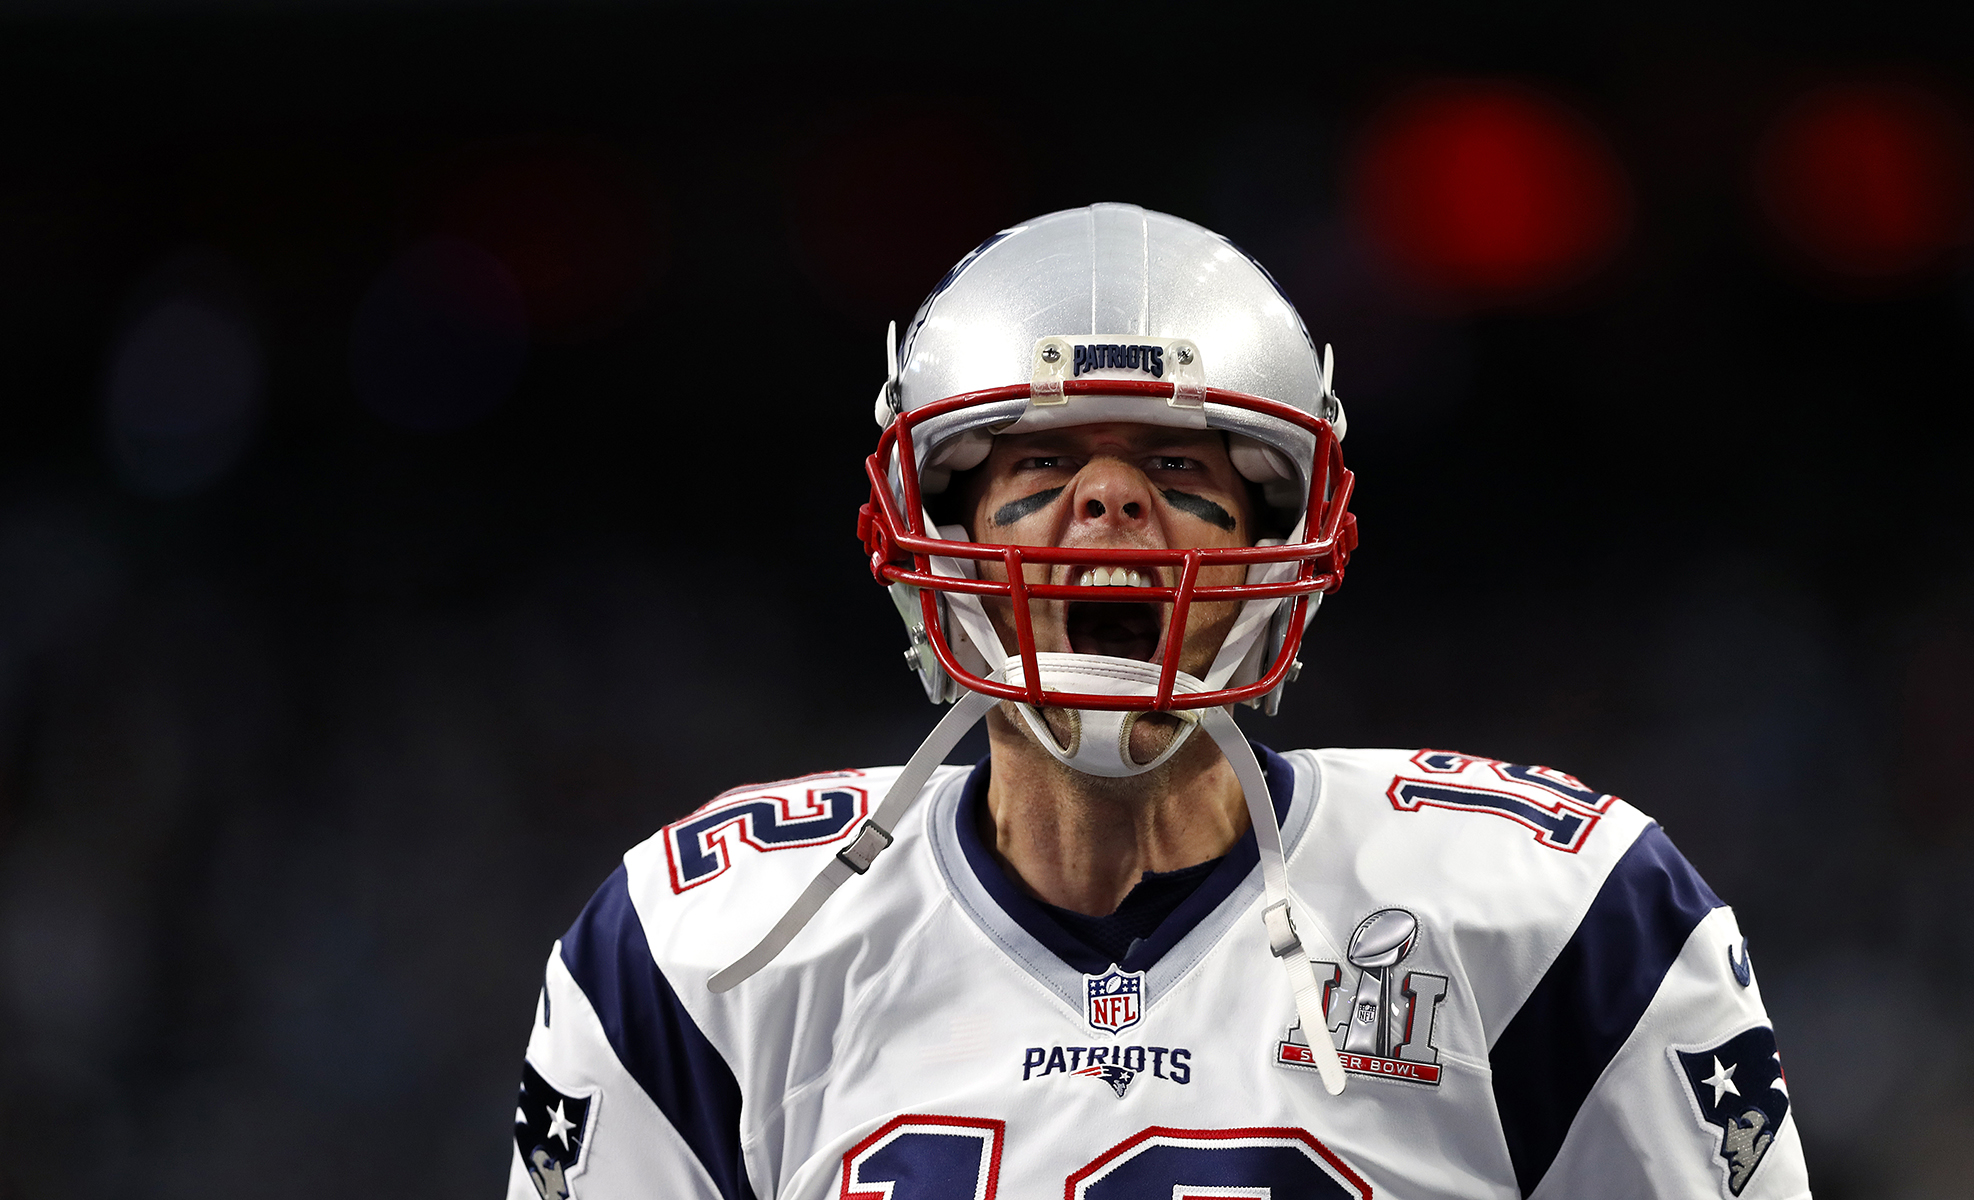 New England Patriots quarterback Tom Brady at NFL Super Bowl LI in Houston